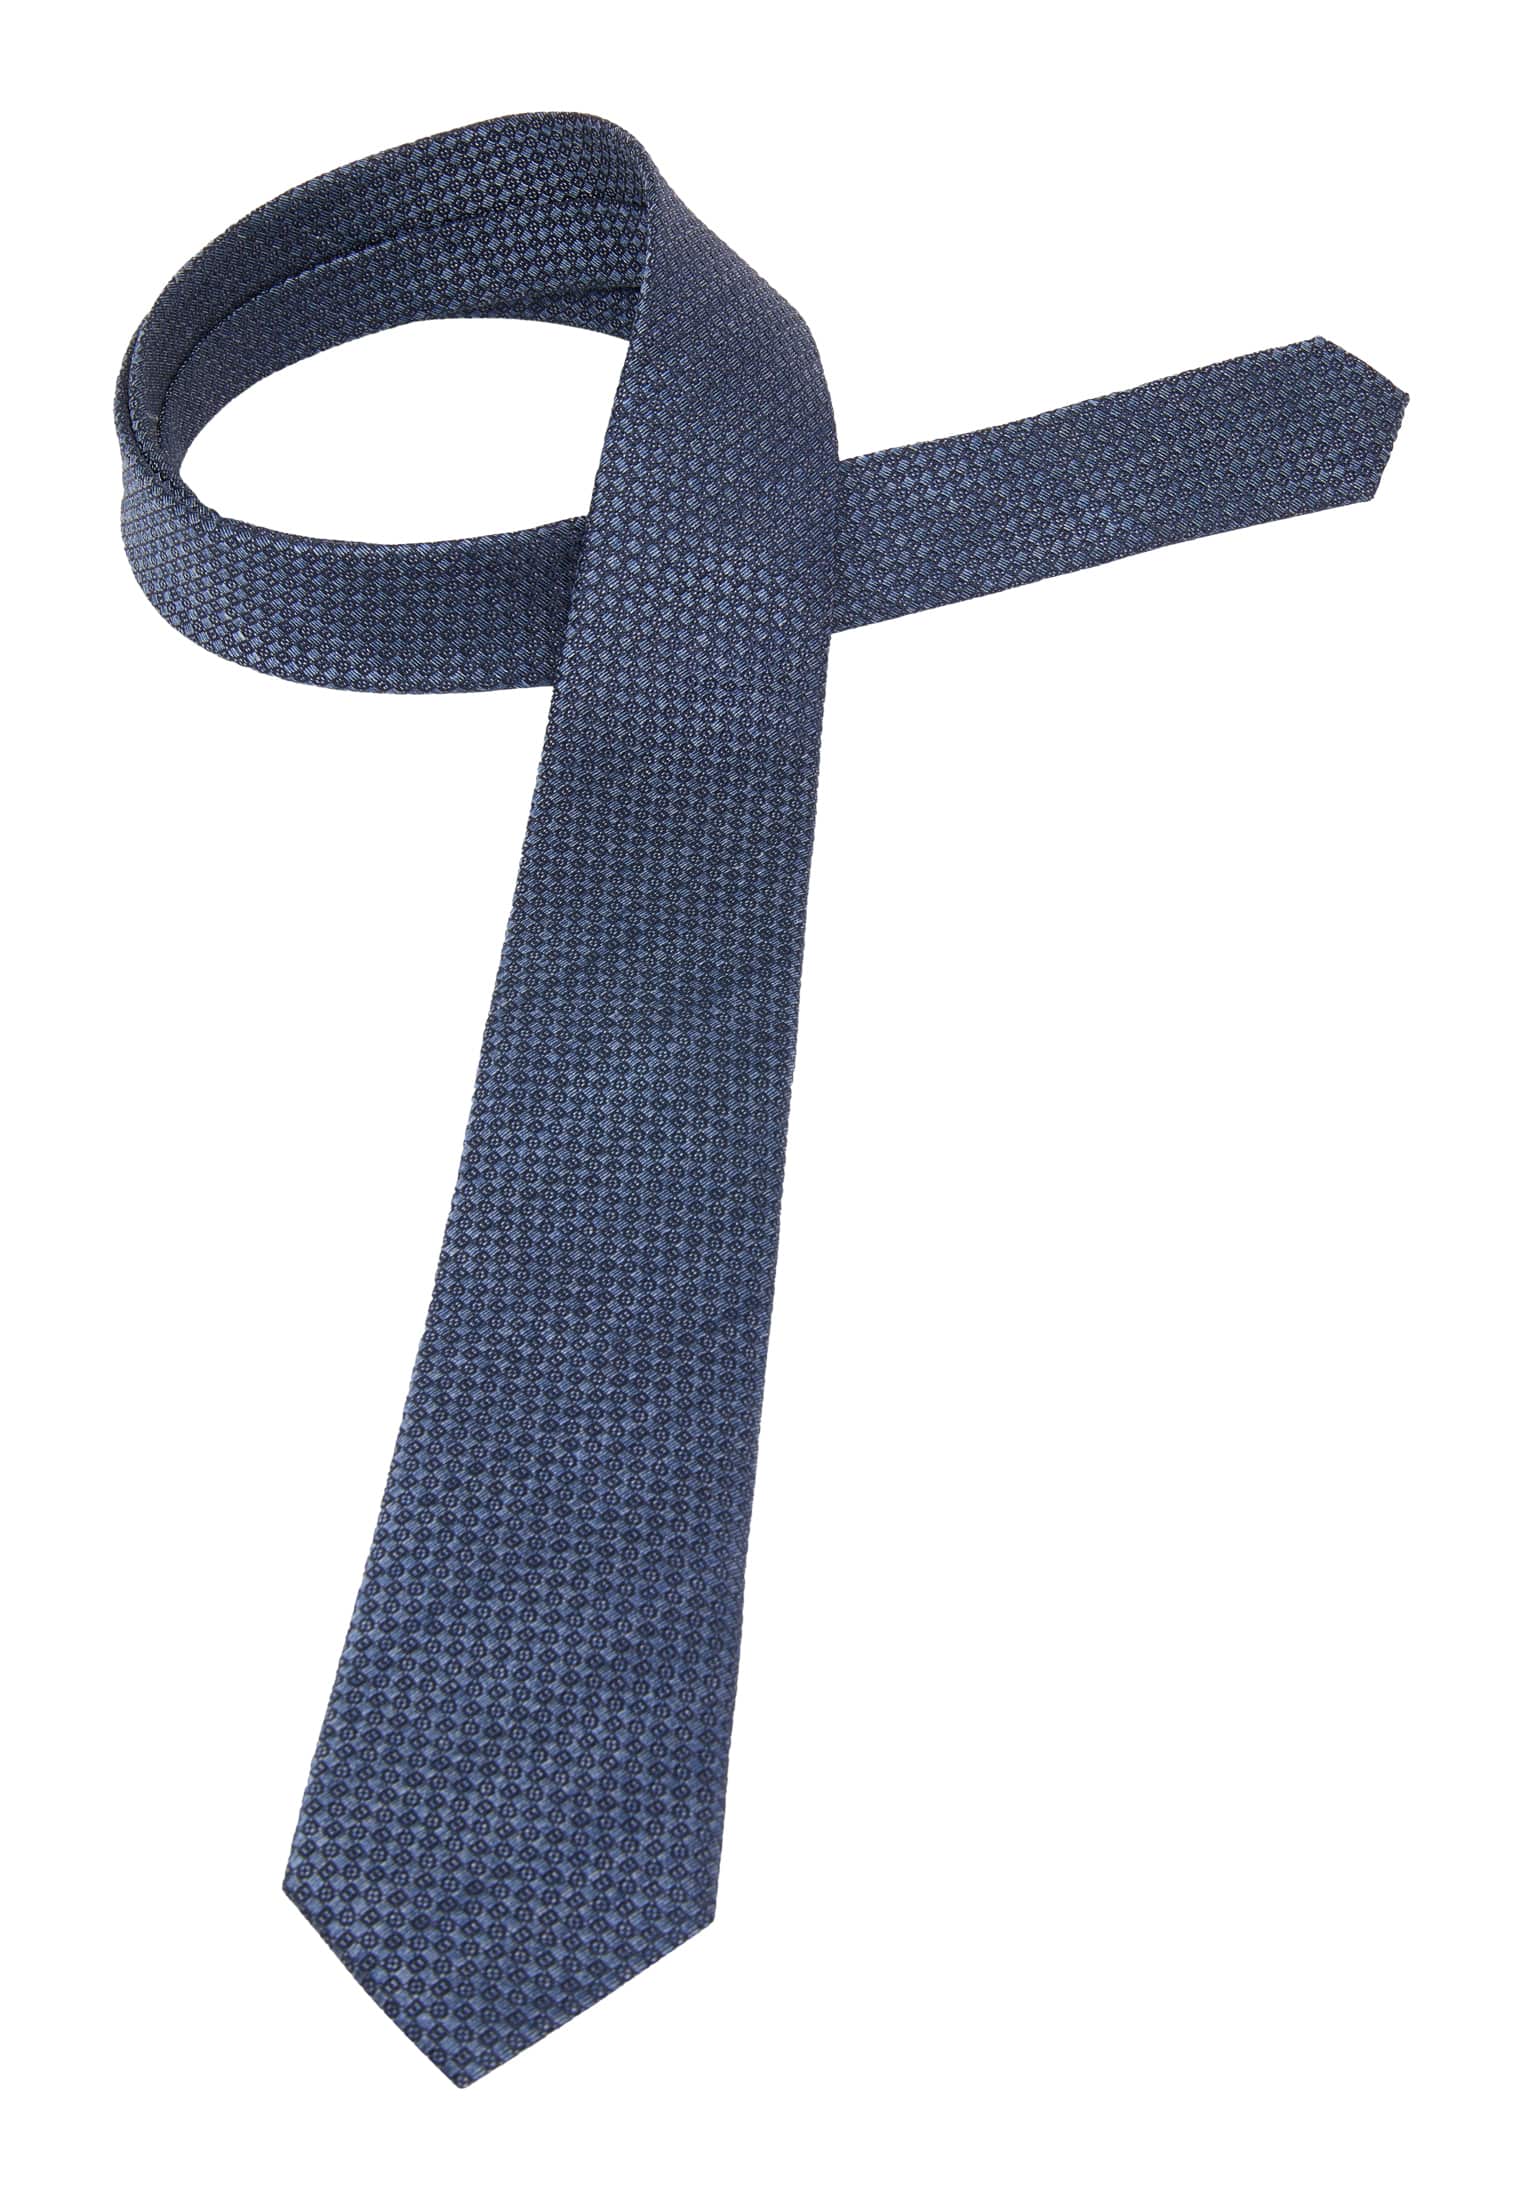 Krawatte in blaugrau strukturiert | | 142 blaugrau 1AC02045-01-63-142 